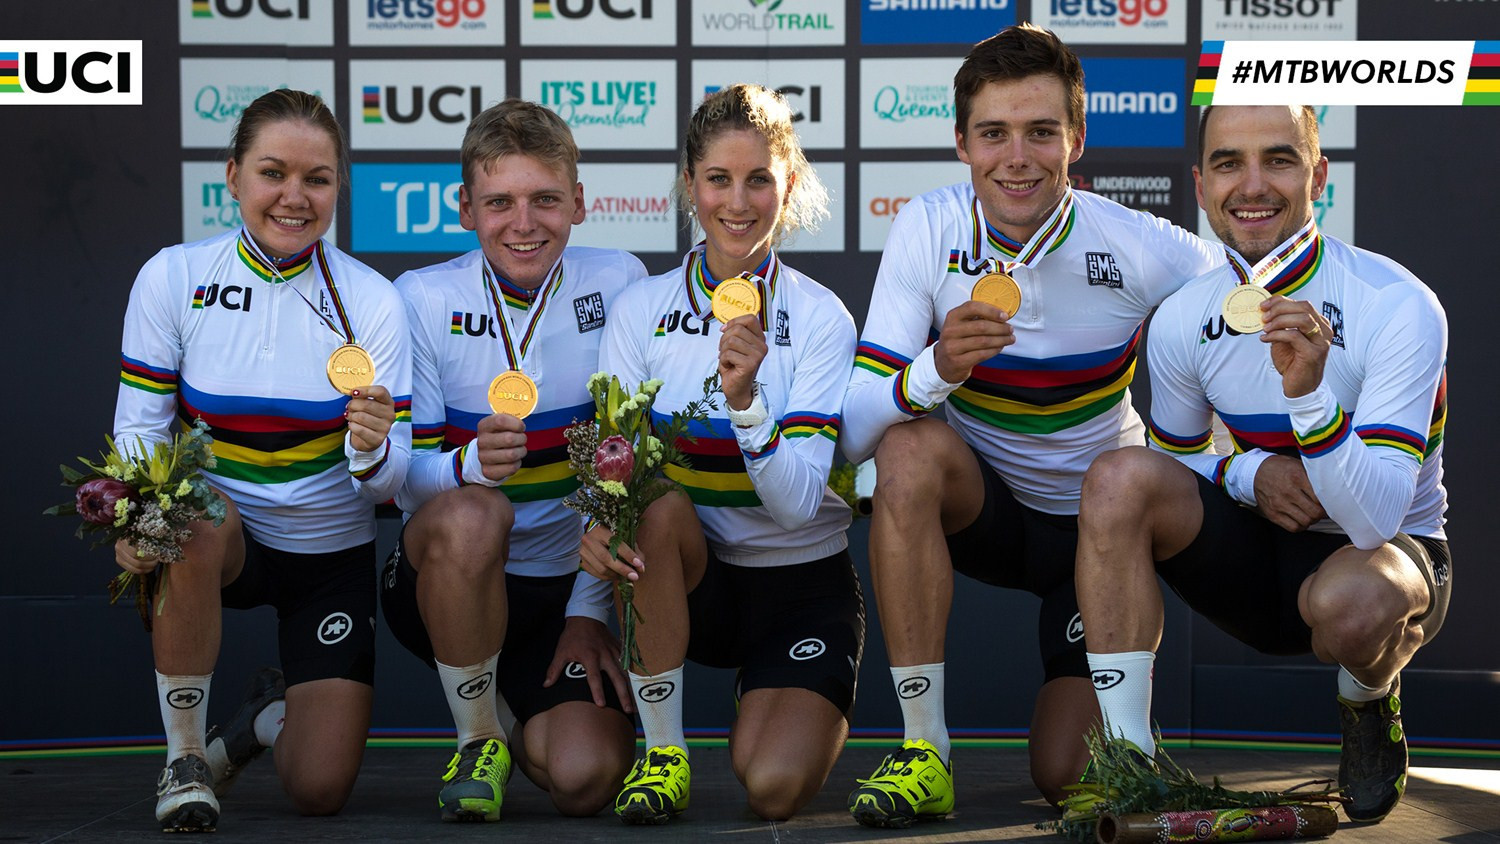 Switzerland earn team relay title at UCI Mountain Bike World Championships